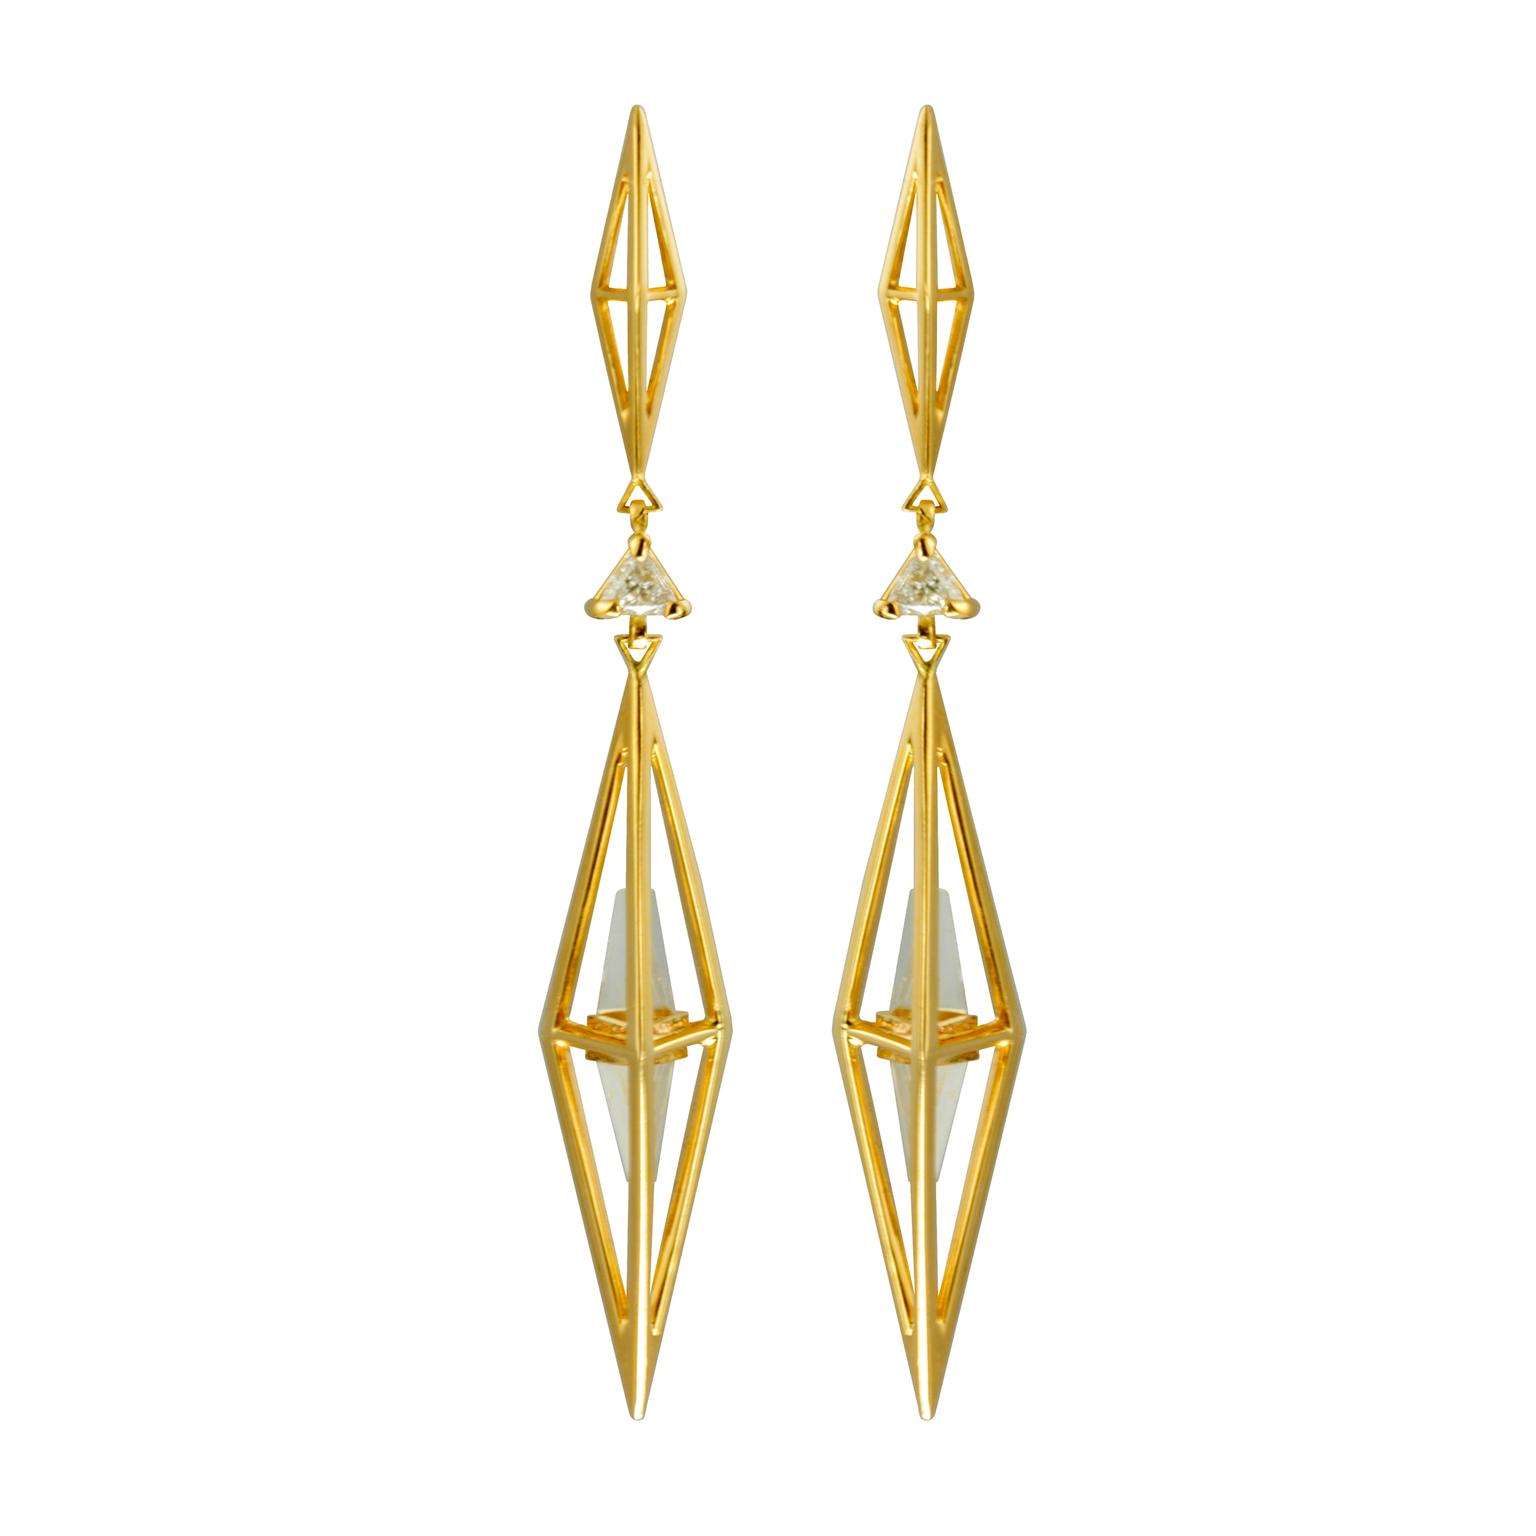 KATTRI Large Tetrahedron earrings